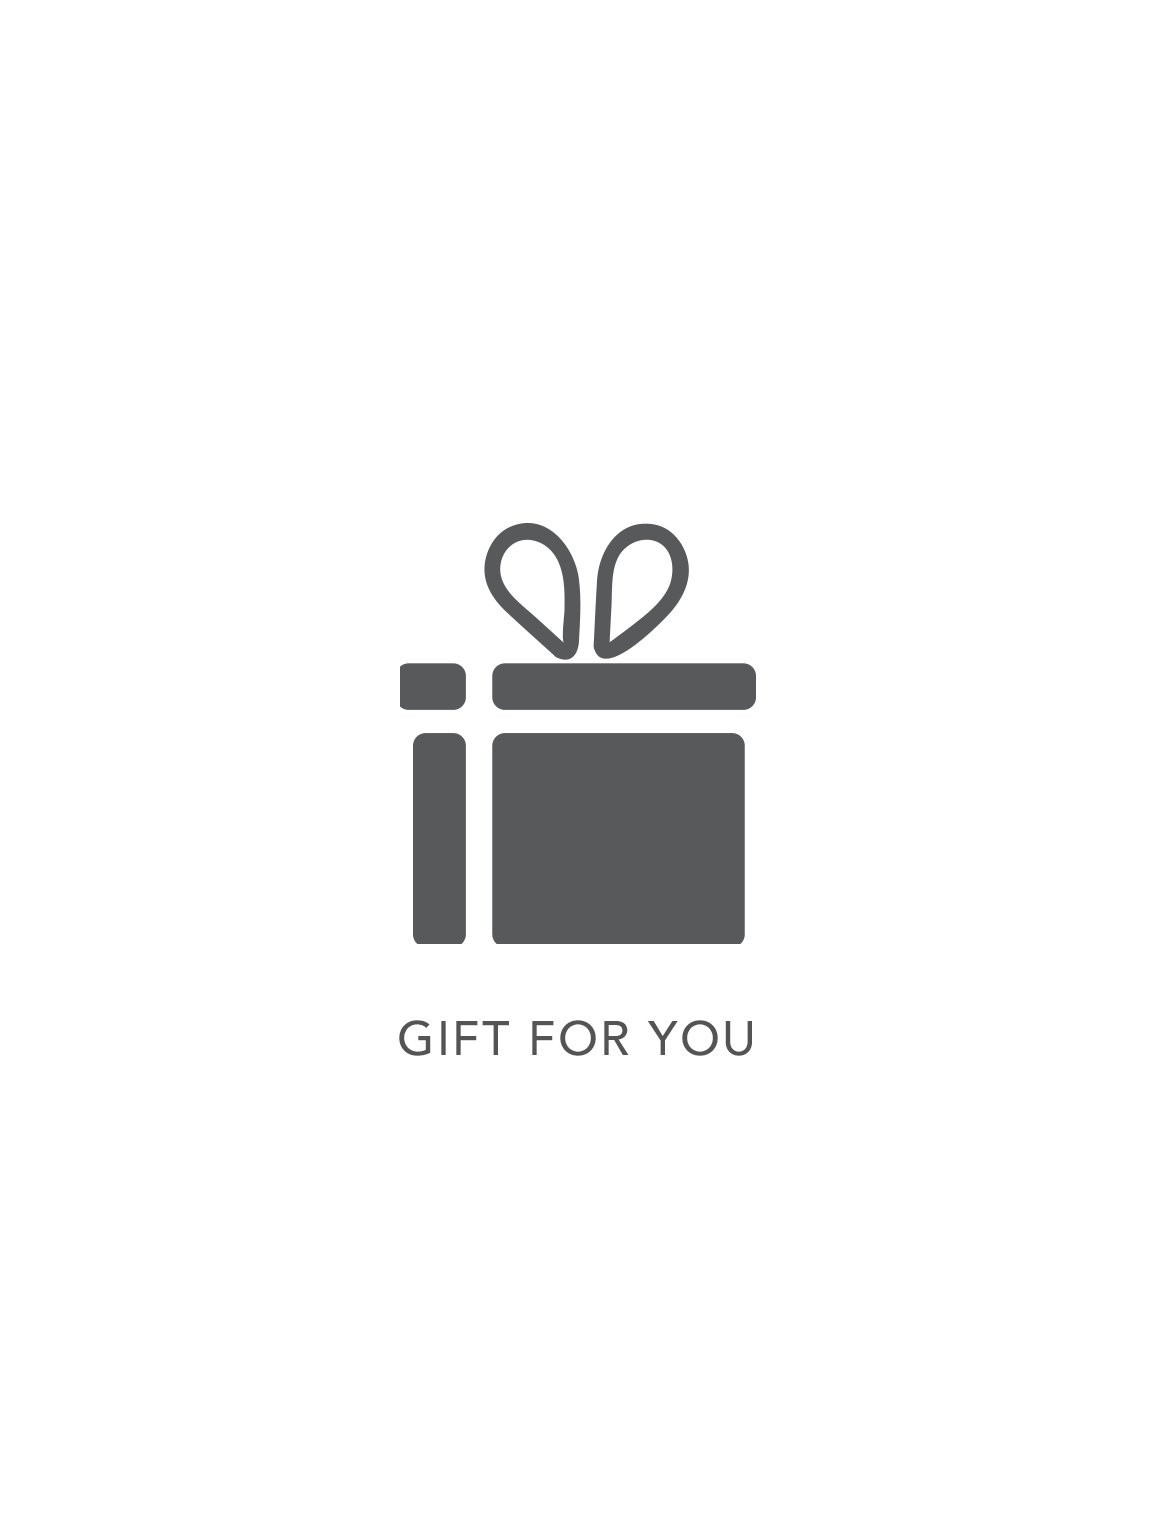  #gift